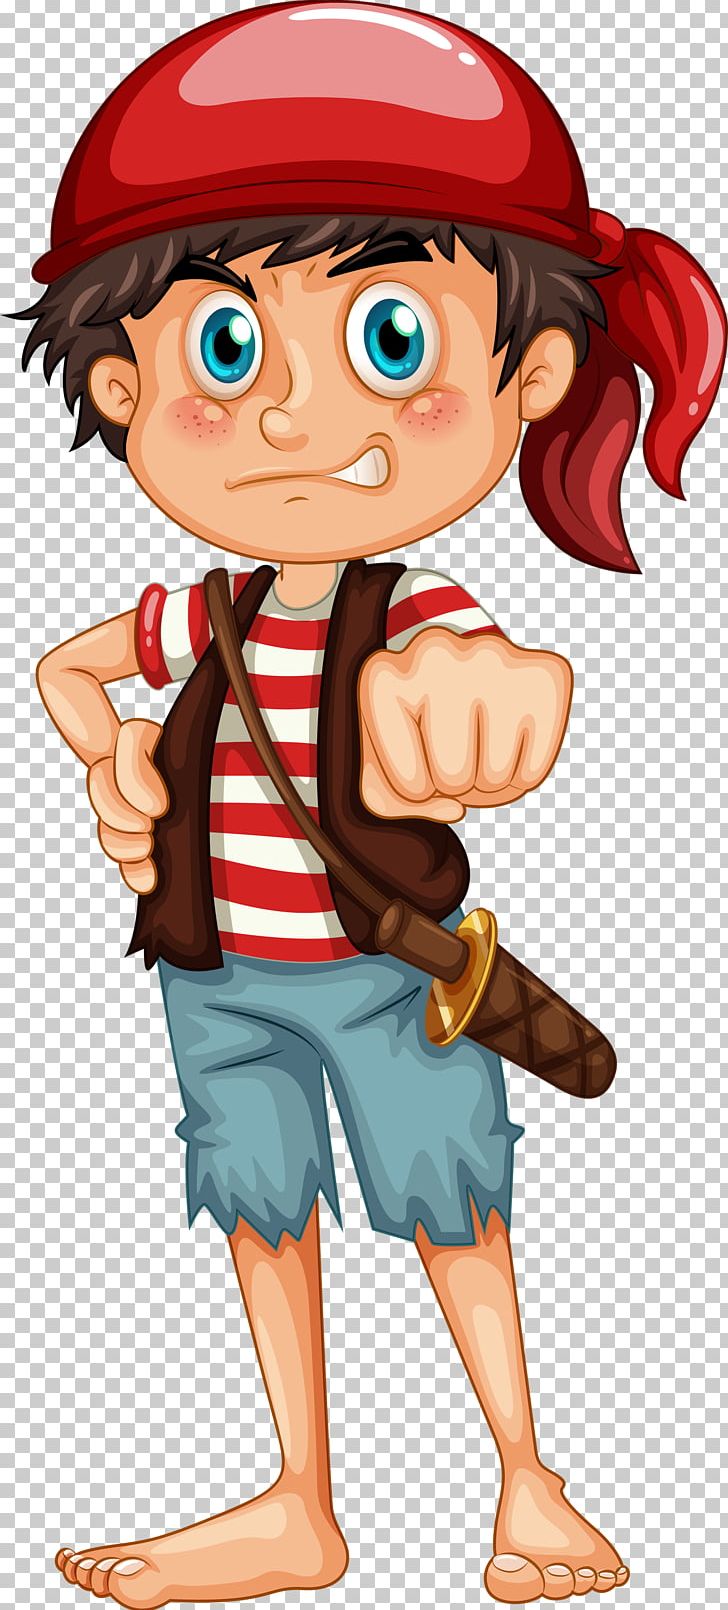 Piracy Cartoon Crew Illustration PNG, Clipart, Arm, Boy, Captain, Cartoon Character, Cartoon Eyes Free PNG Download